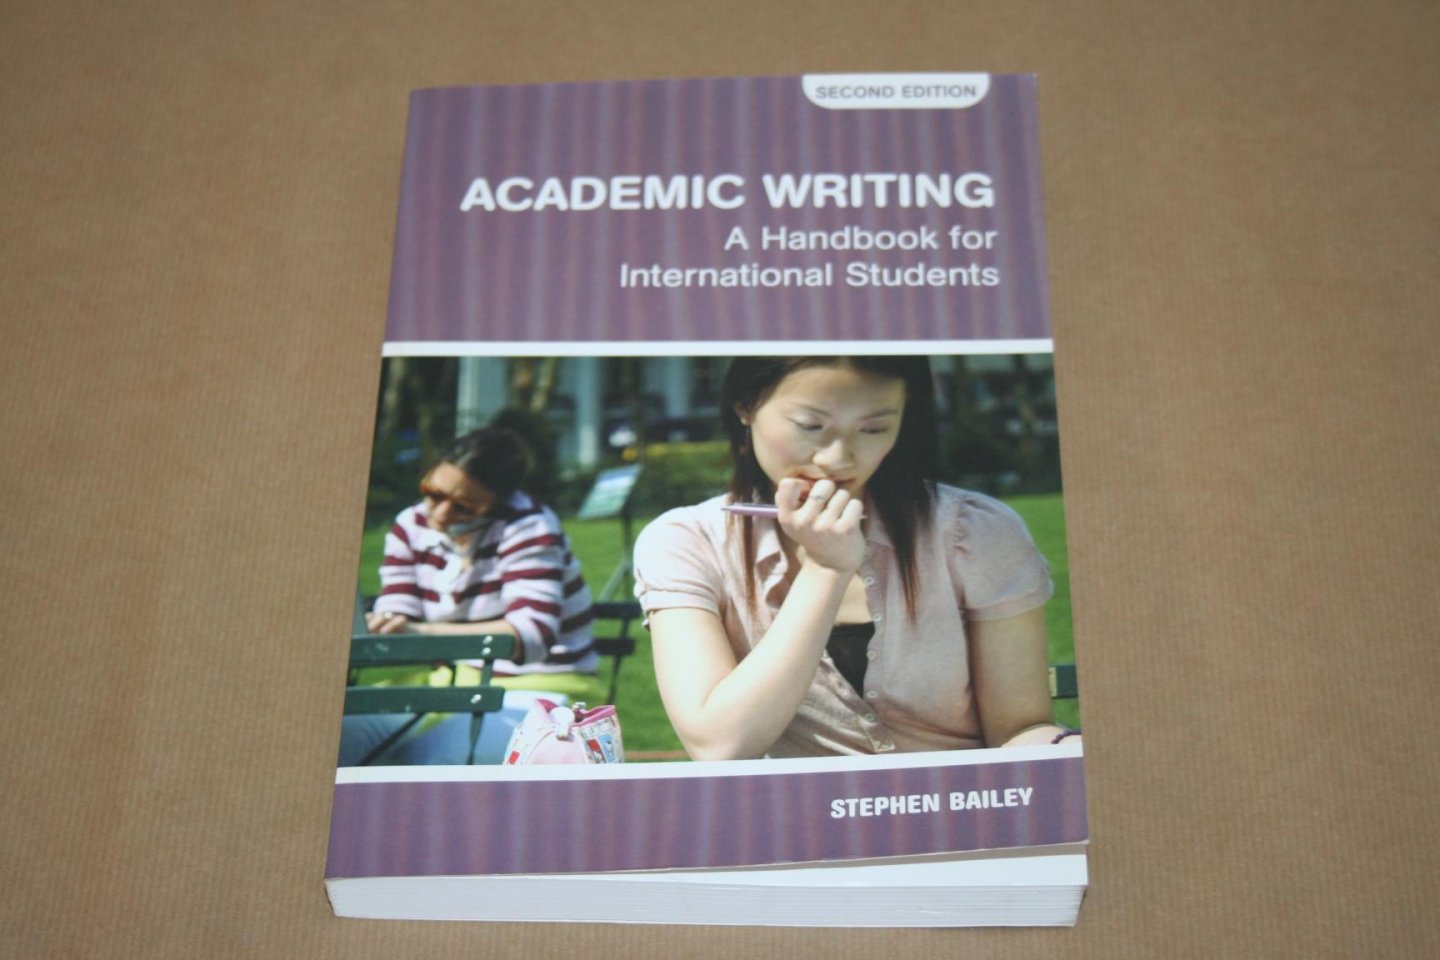 Stephen Bailey - Academic writing -- A handbook for international students